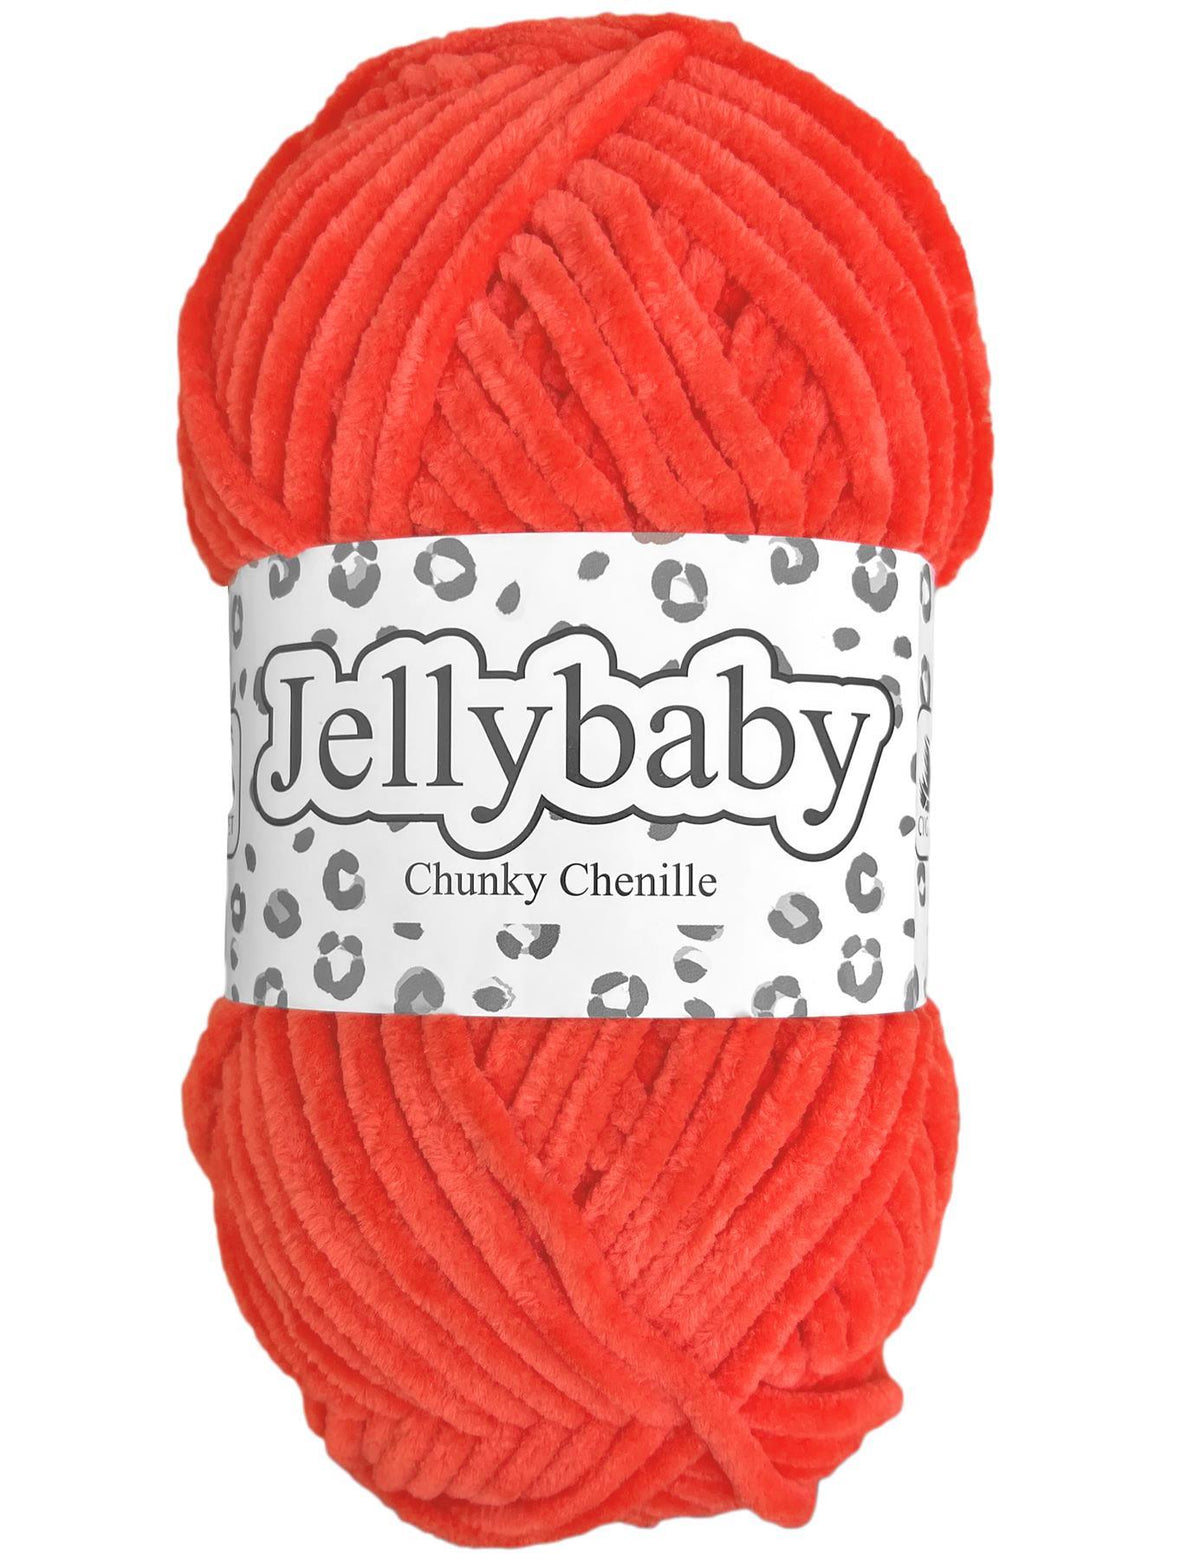 Cygnet Jellybaby Chenille Chunky Cherry Red (003) -100g